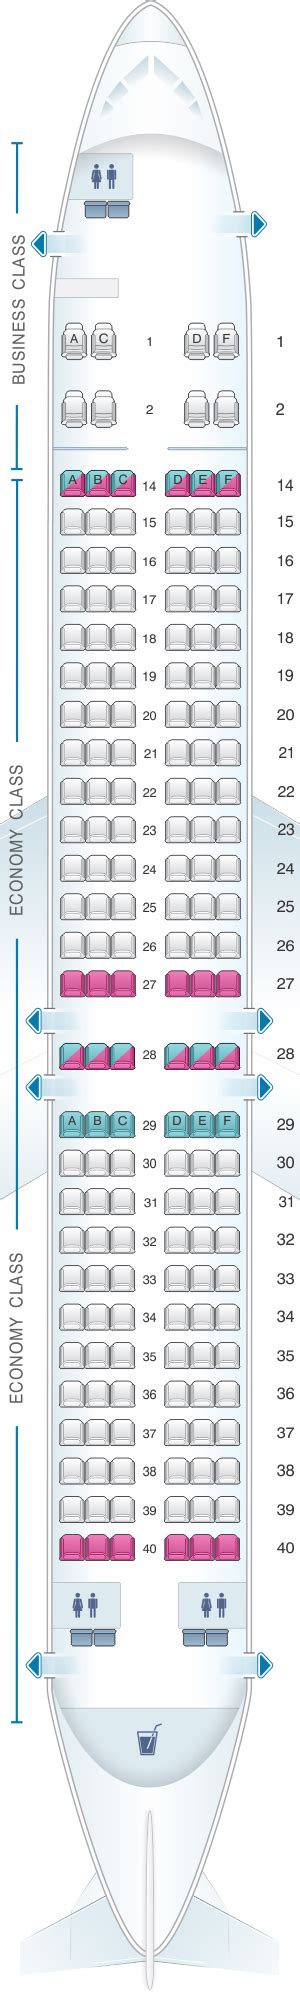 fiji airways 737-800 seat map